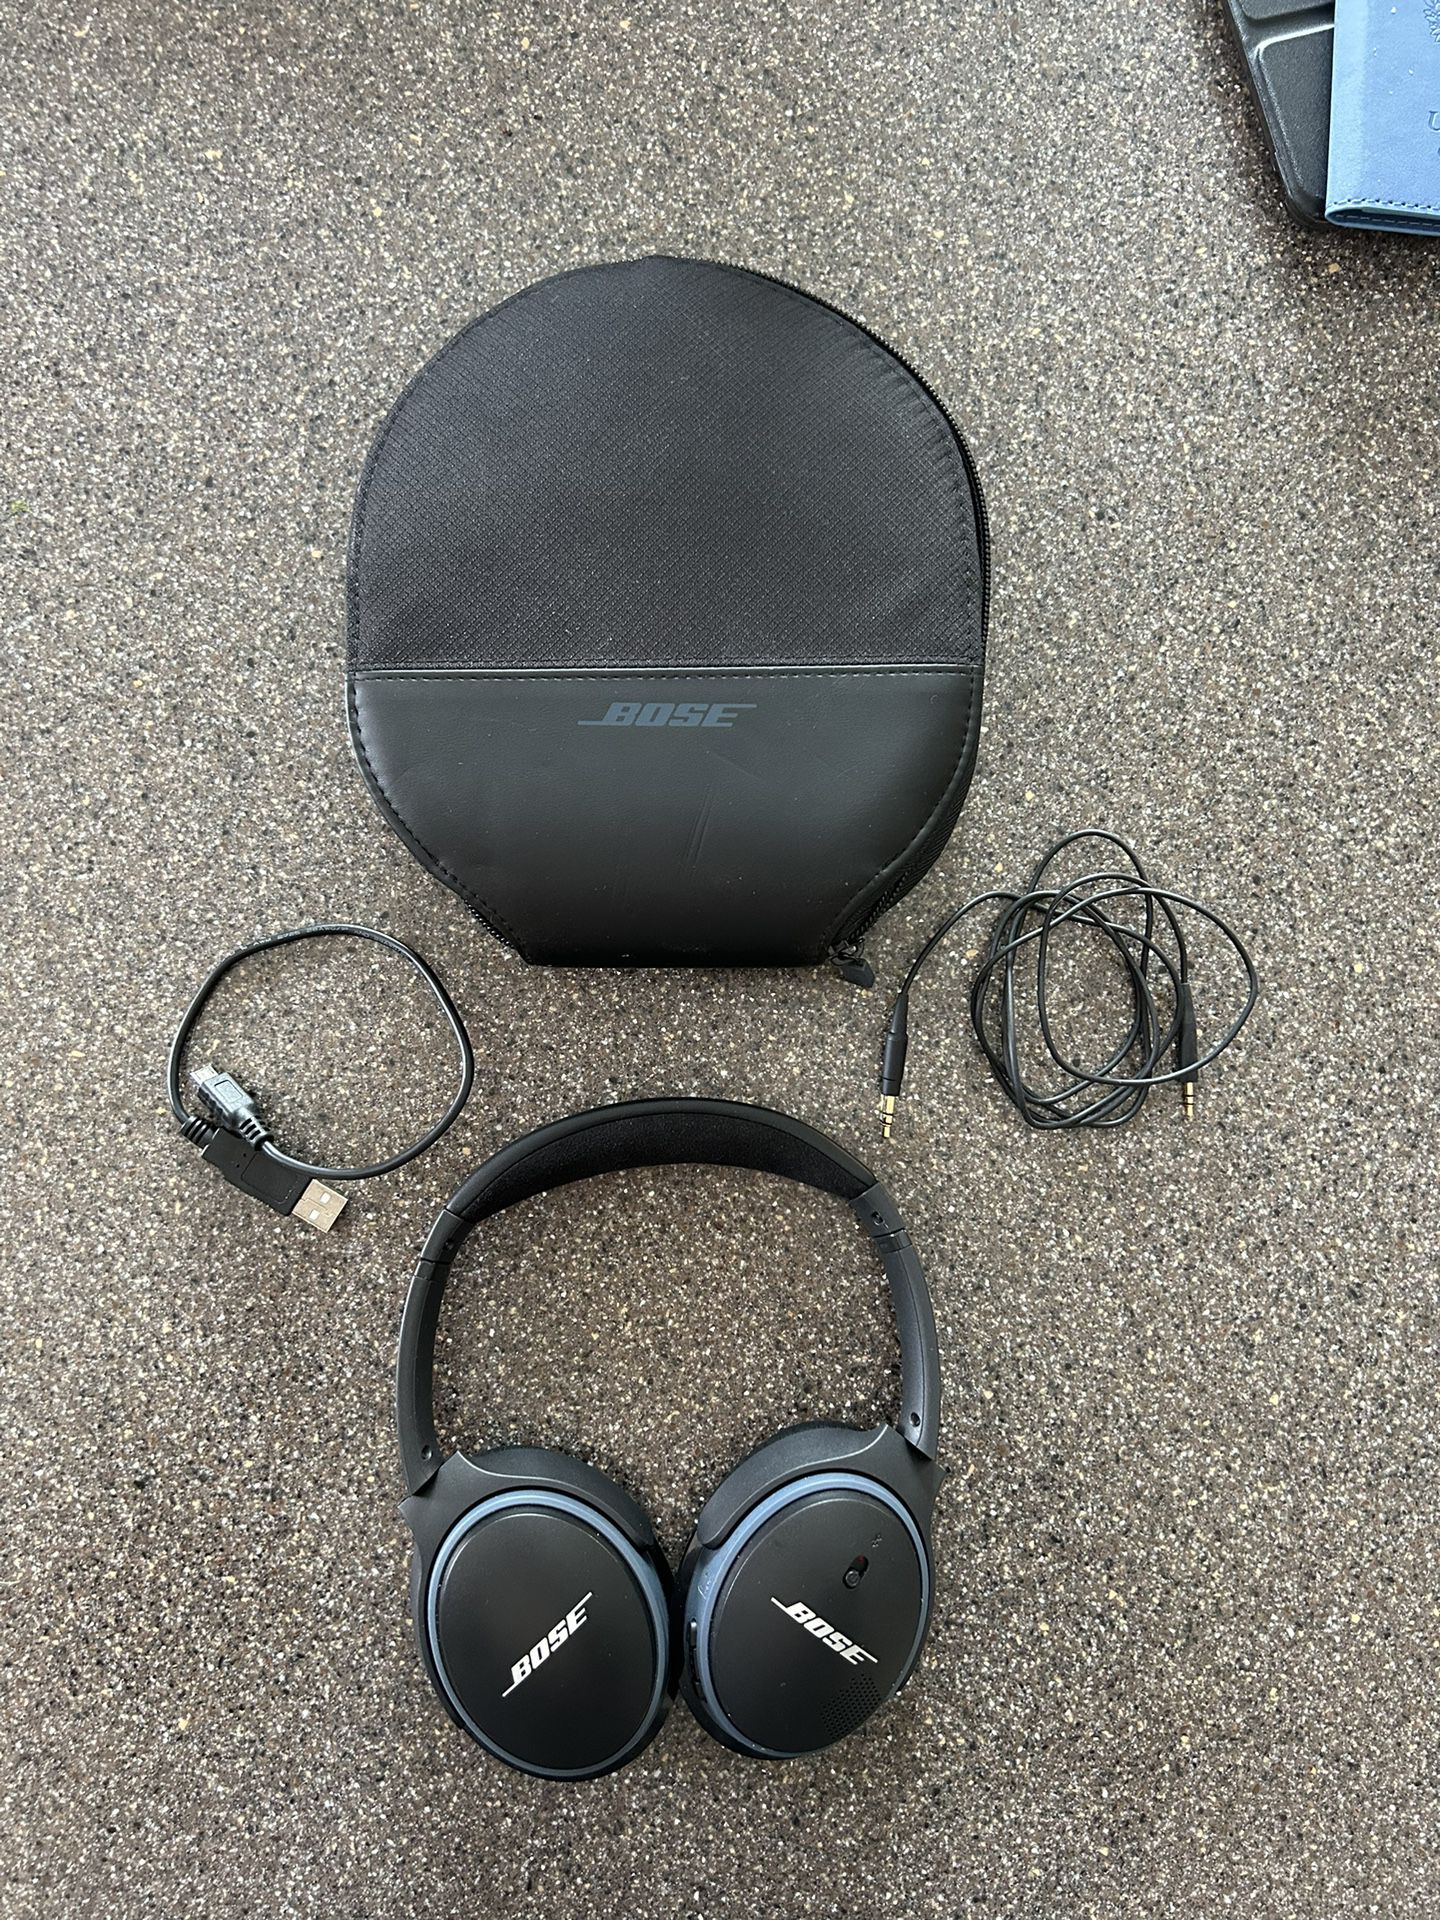   Bose Over Ear Wireless Headphones 